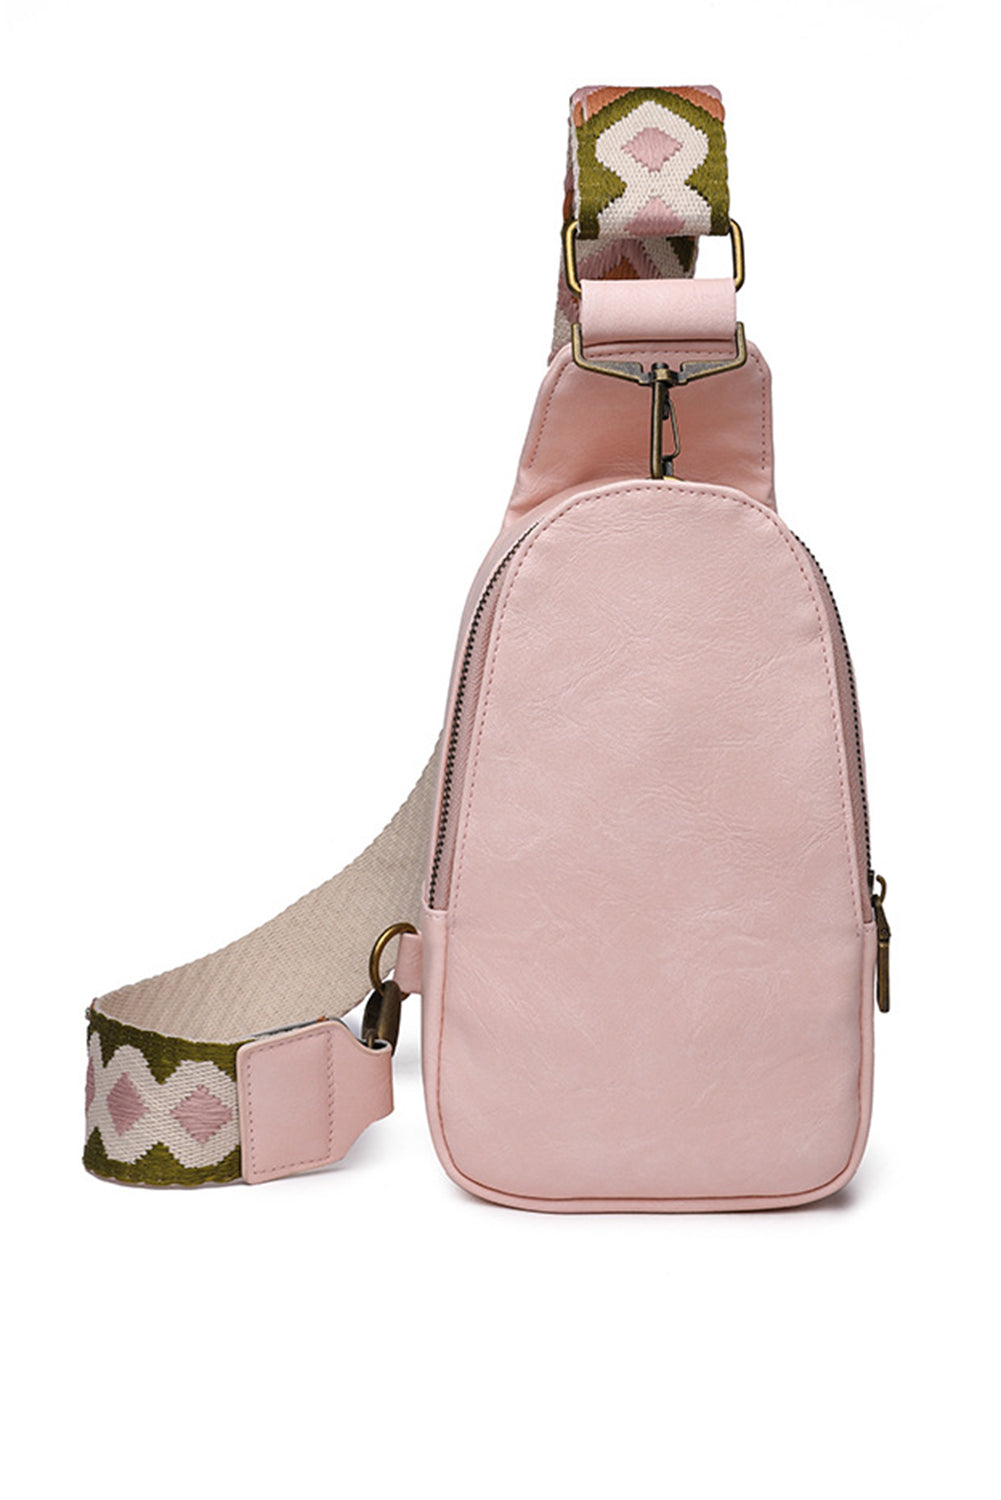 Pink sling bag with colorful adjustable strap